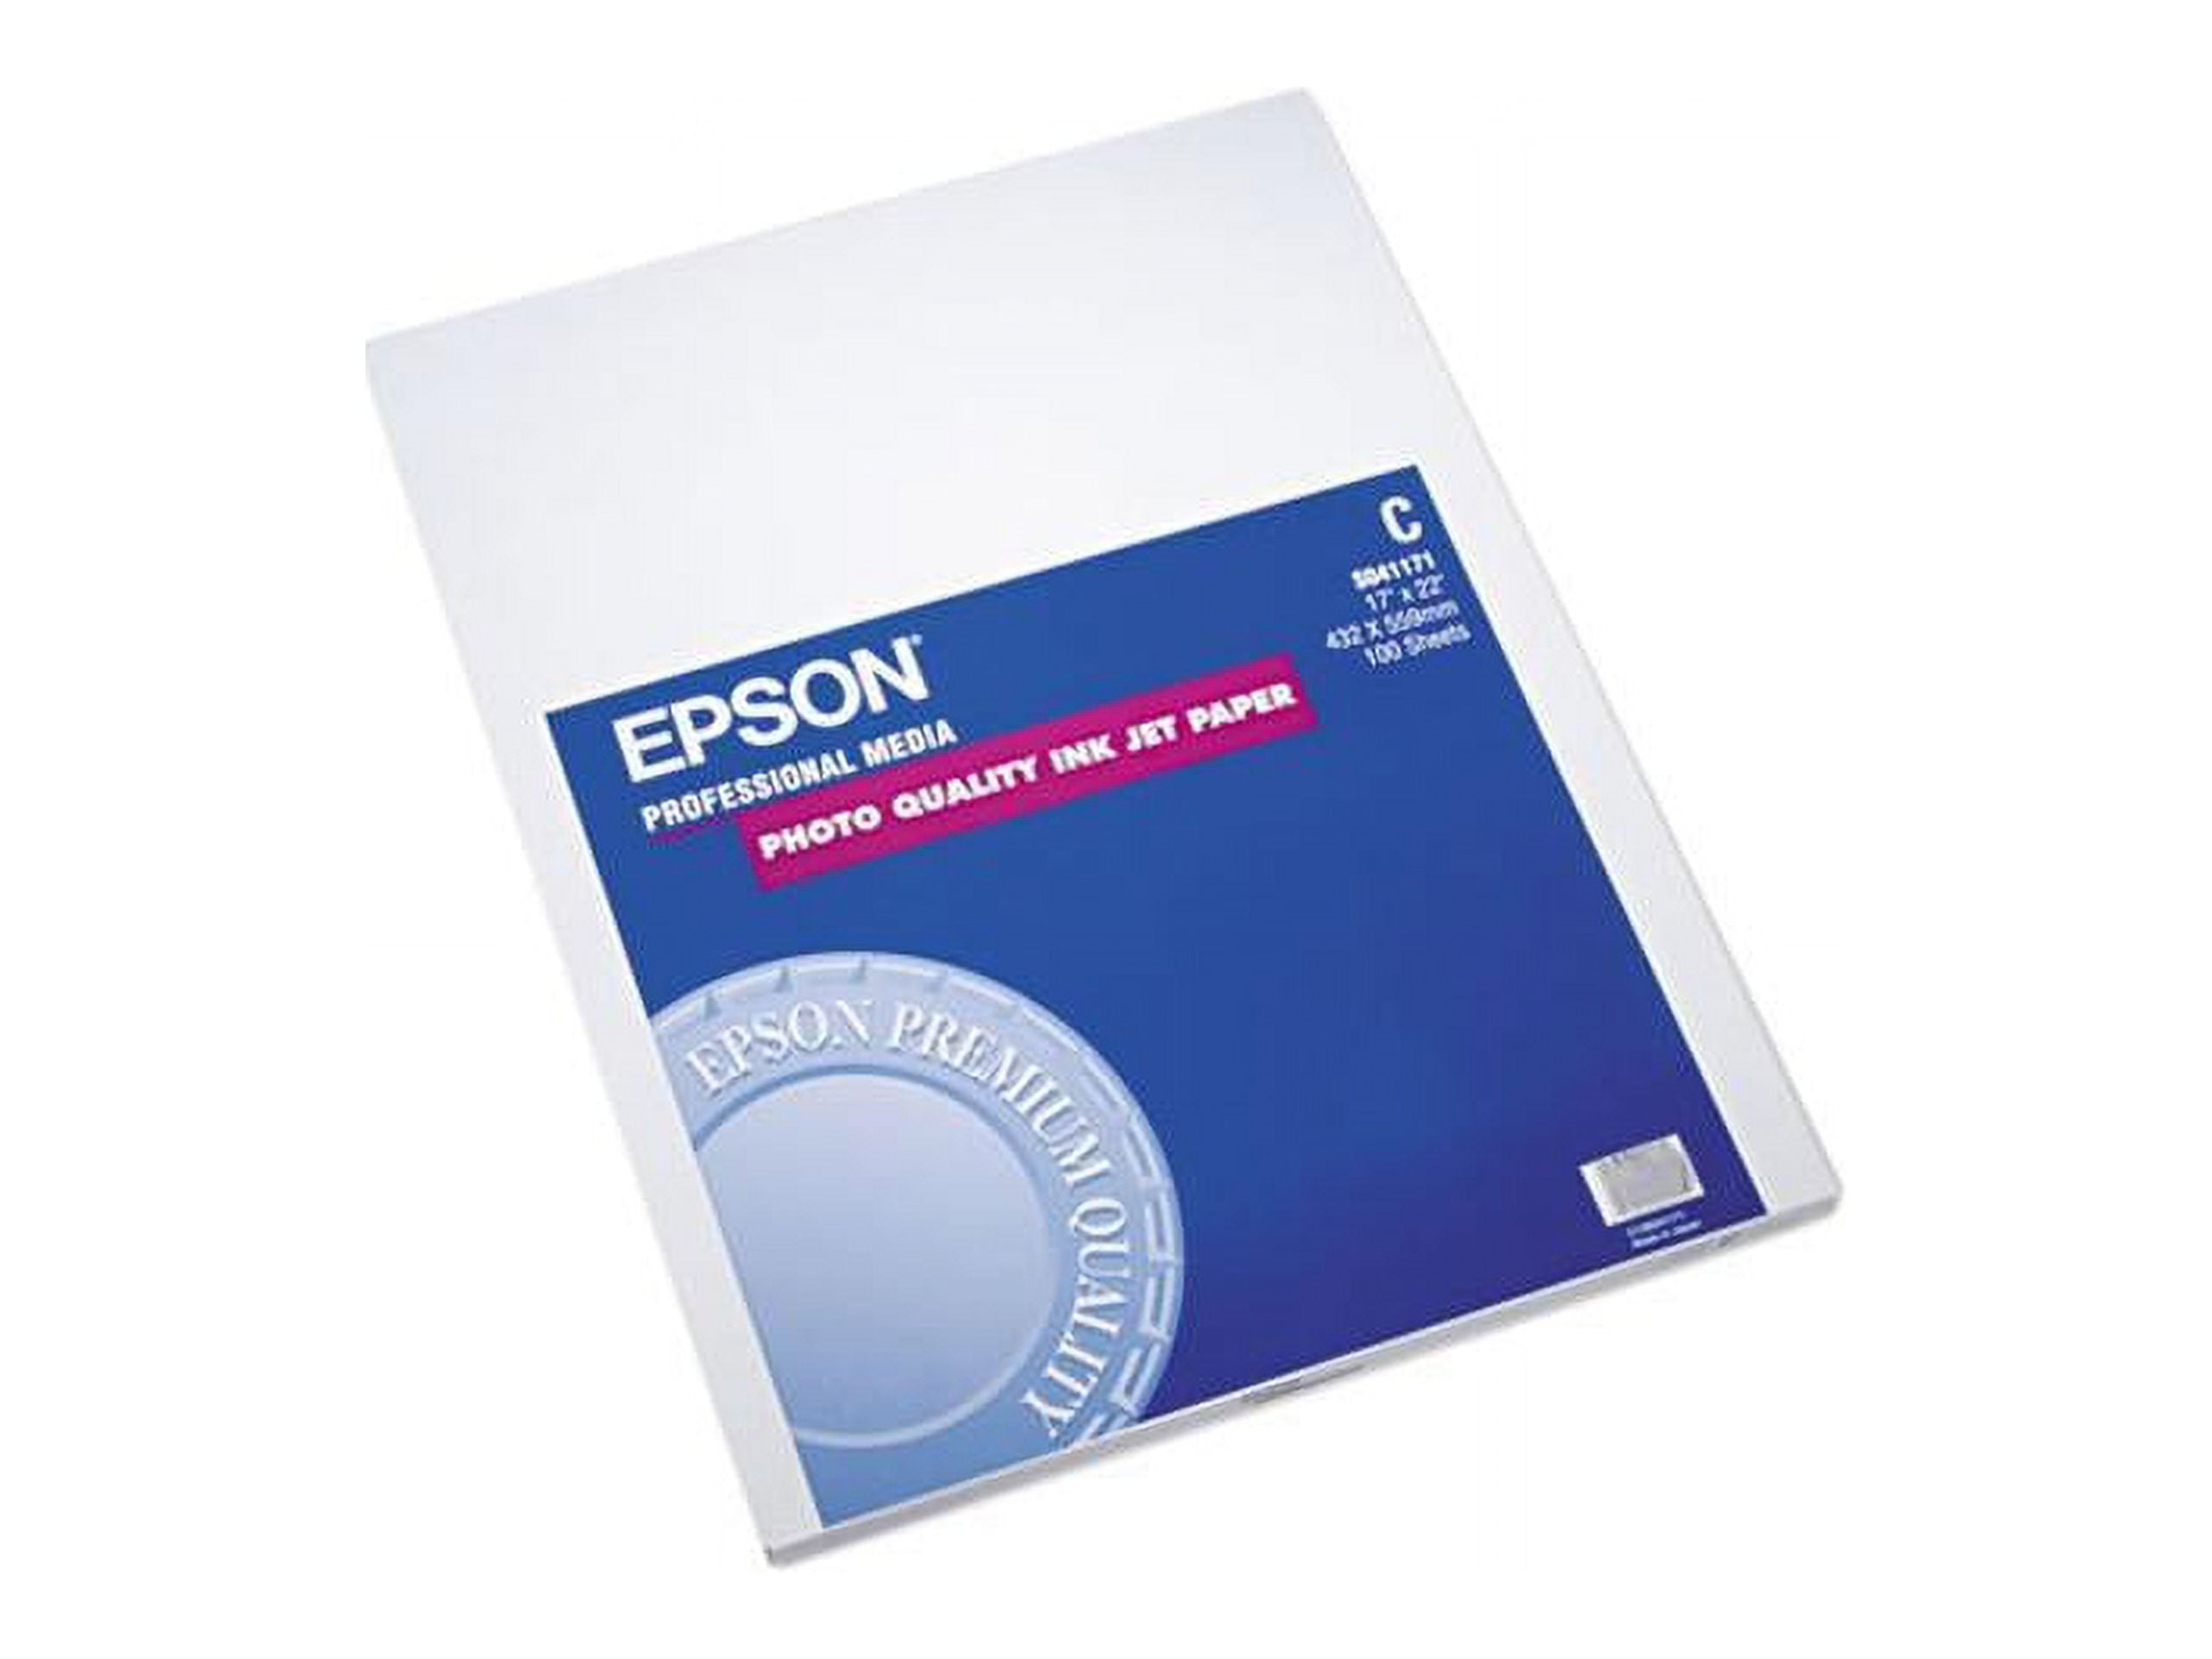 Epson Epson Inkjet Presentation Paper Matte 8.5x11 27 lb 100 sheets